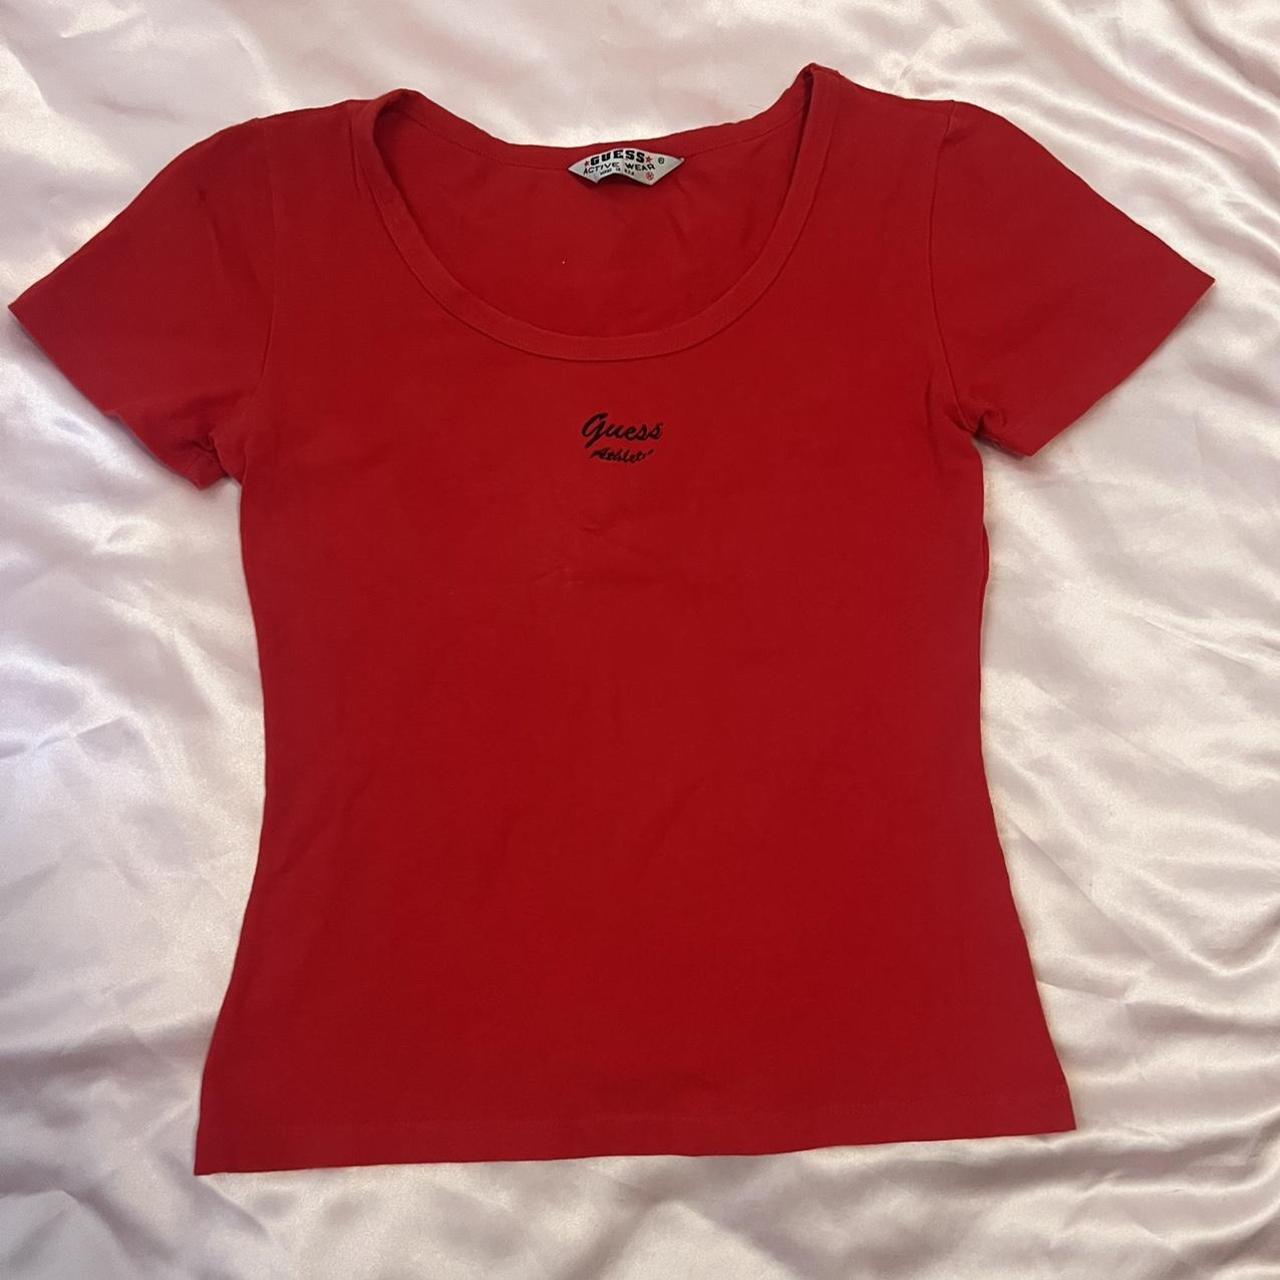 Guess Women's Red and Navy T-shirt | Depop